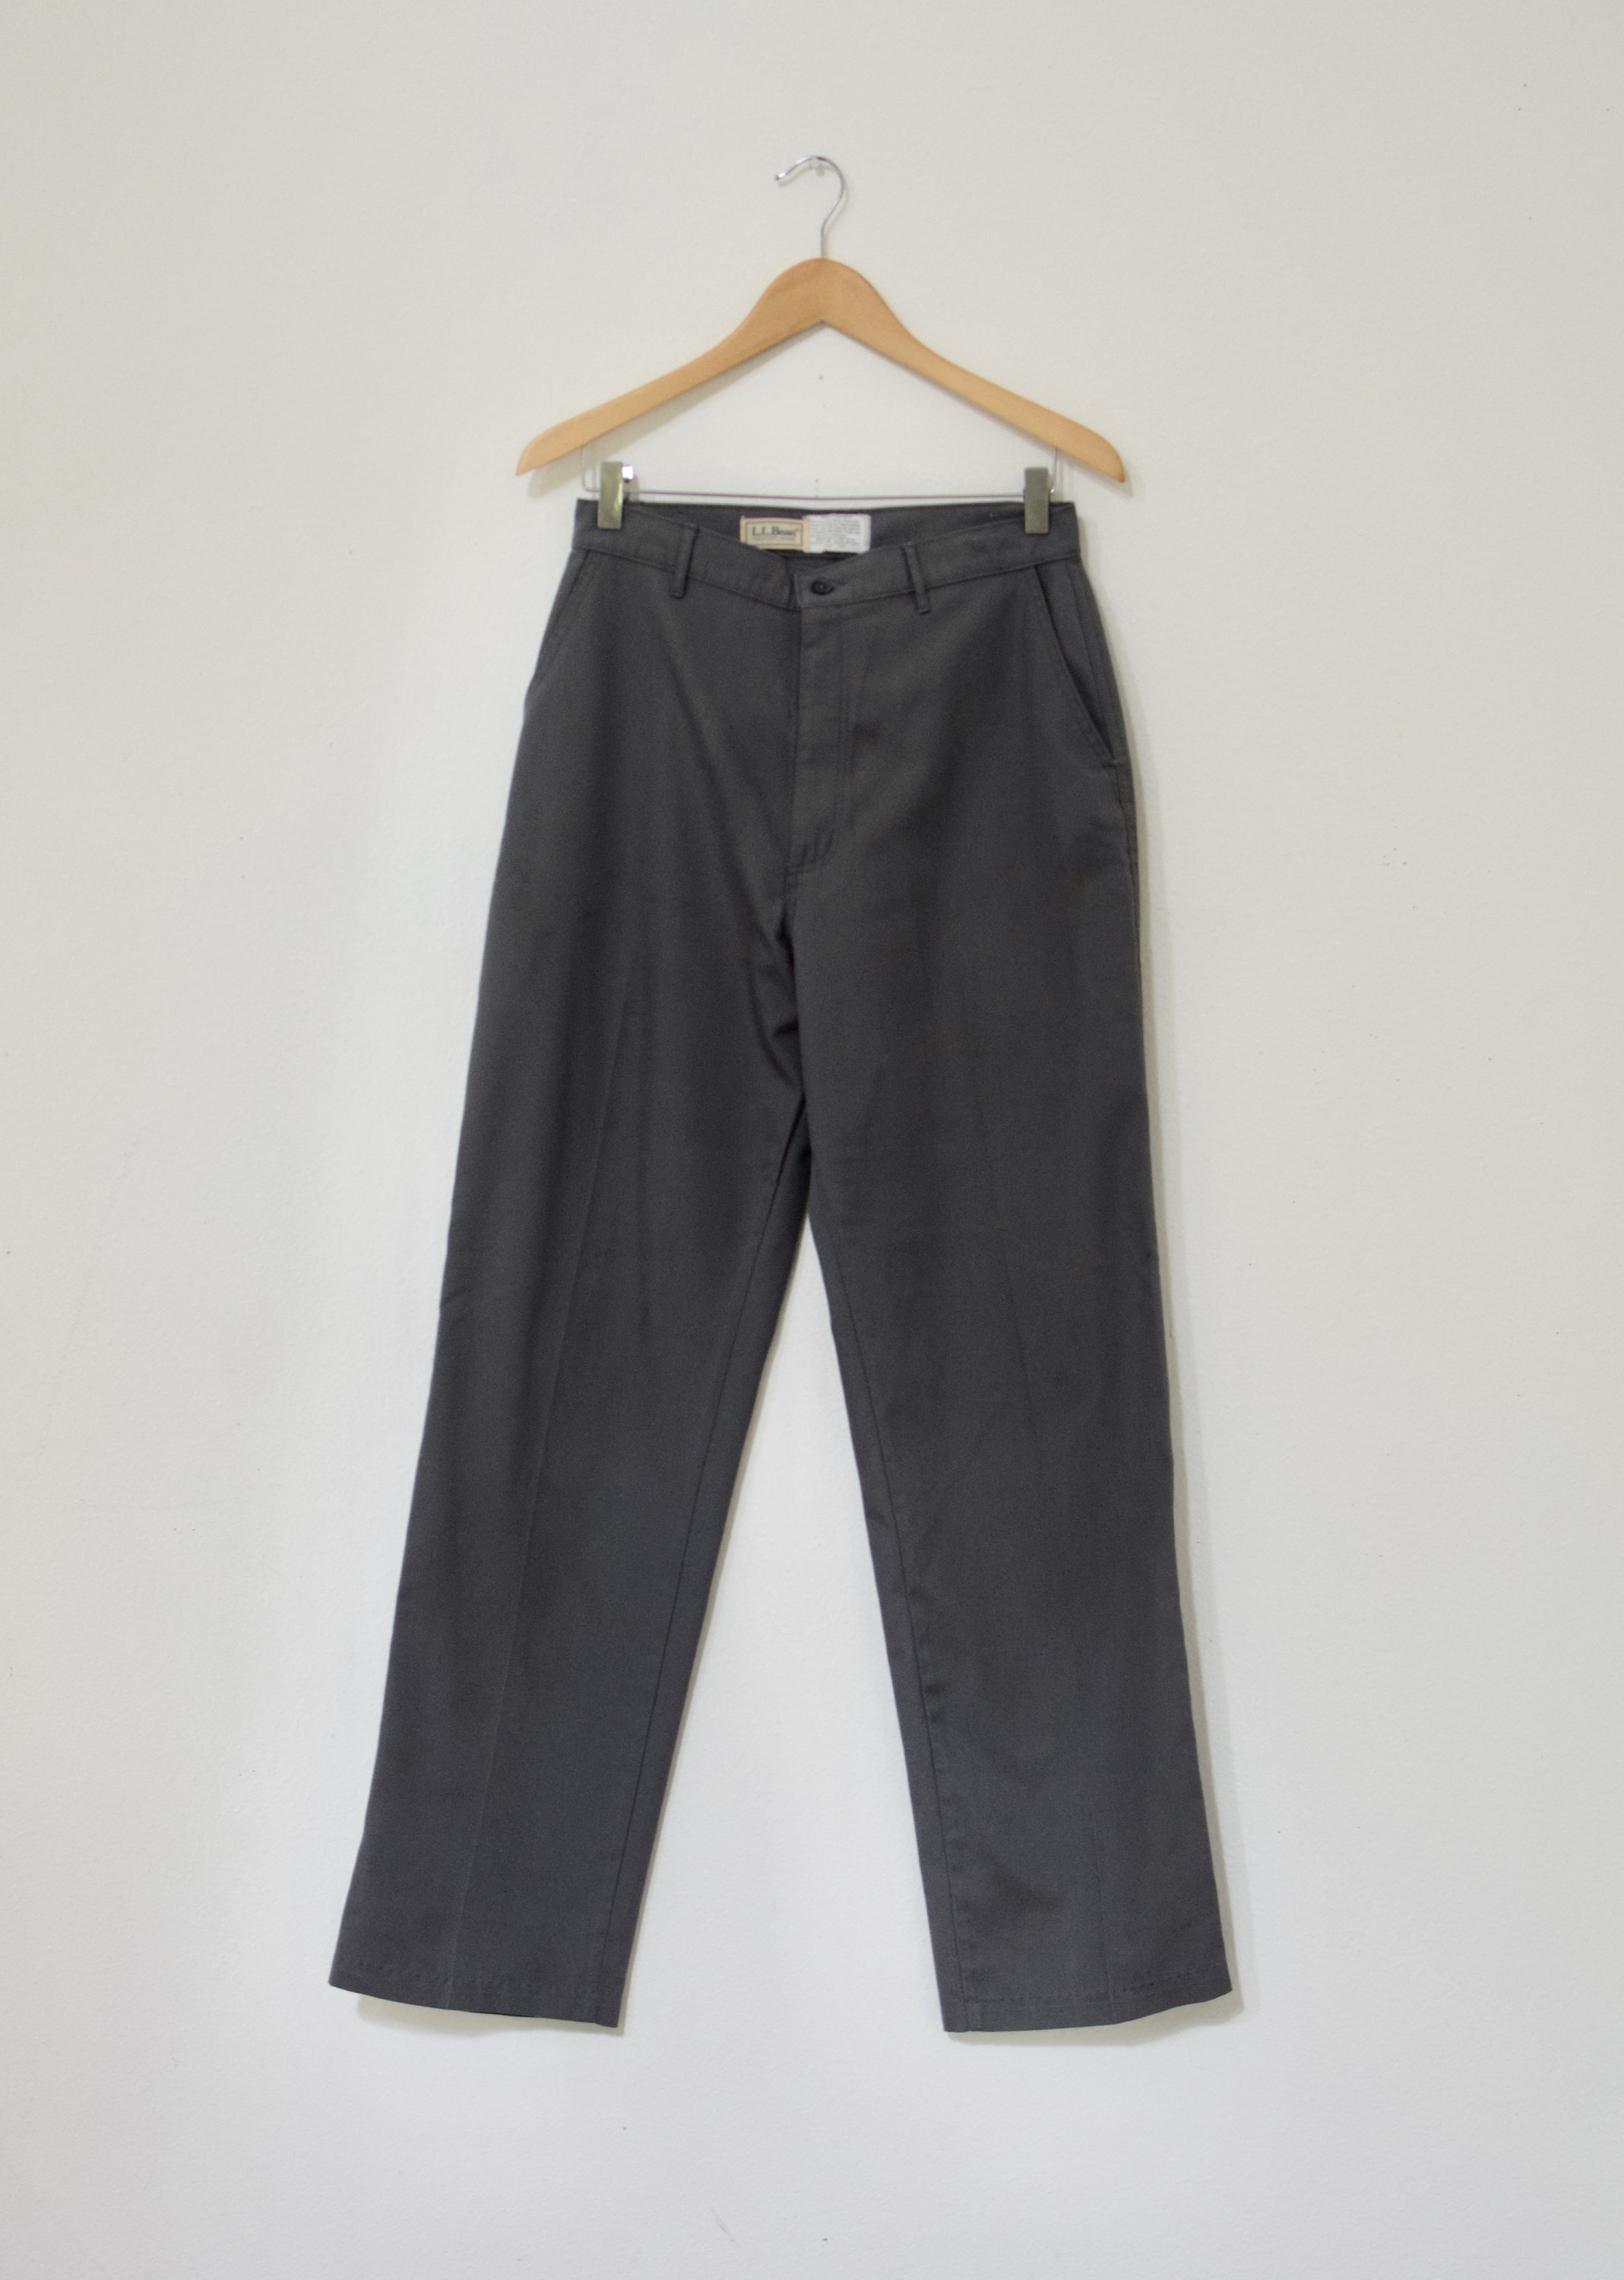 80s LL Bean Work Pants/ Gray Utility Slacks/ Women's Size | Etsy